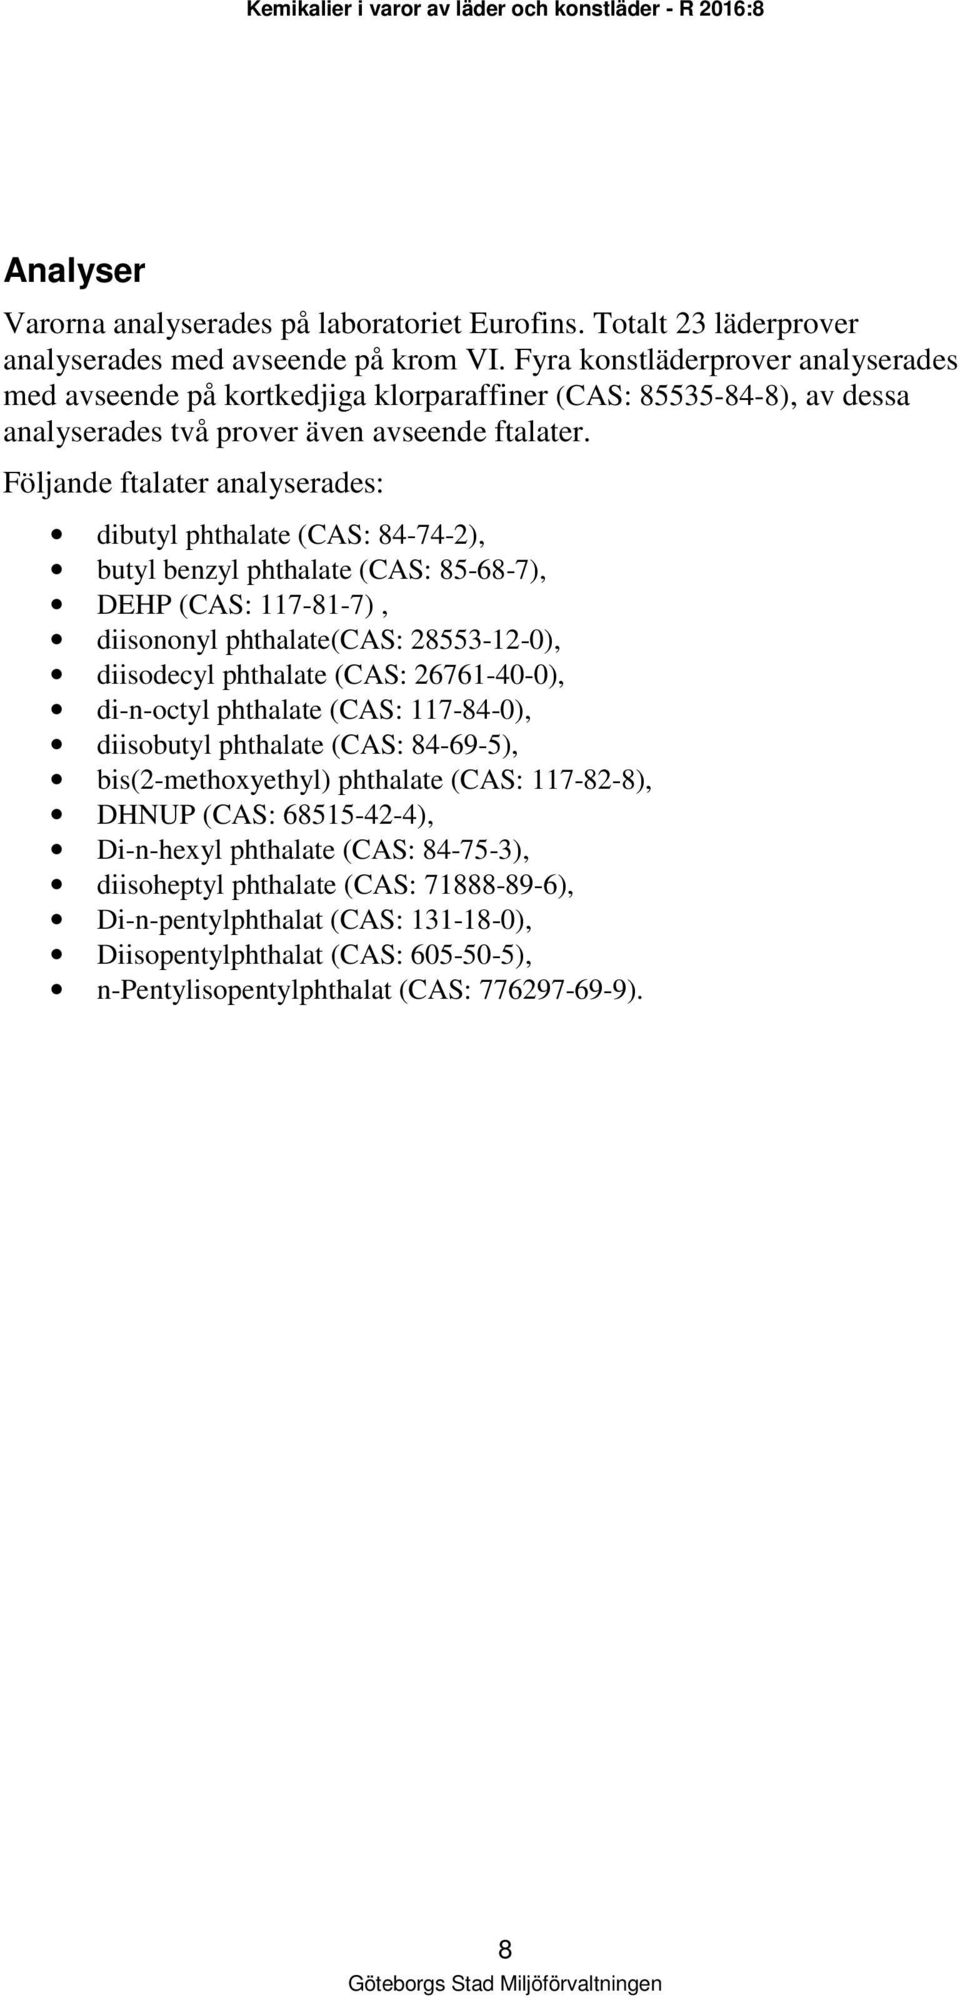 Följande ftalater analyserades: dibutyl phthalate (CAS: 84-74-2), butyl benzyl phthalate (CAS: 85-68-7), DEHP (CAS: 117-81-7), diisononyl phthalate(cas: 28553-12-0), diisodecyl phthalate (CAS: